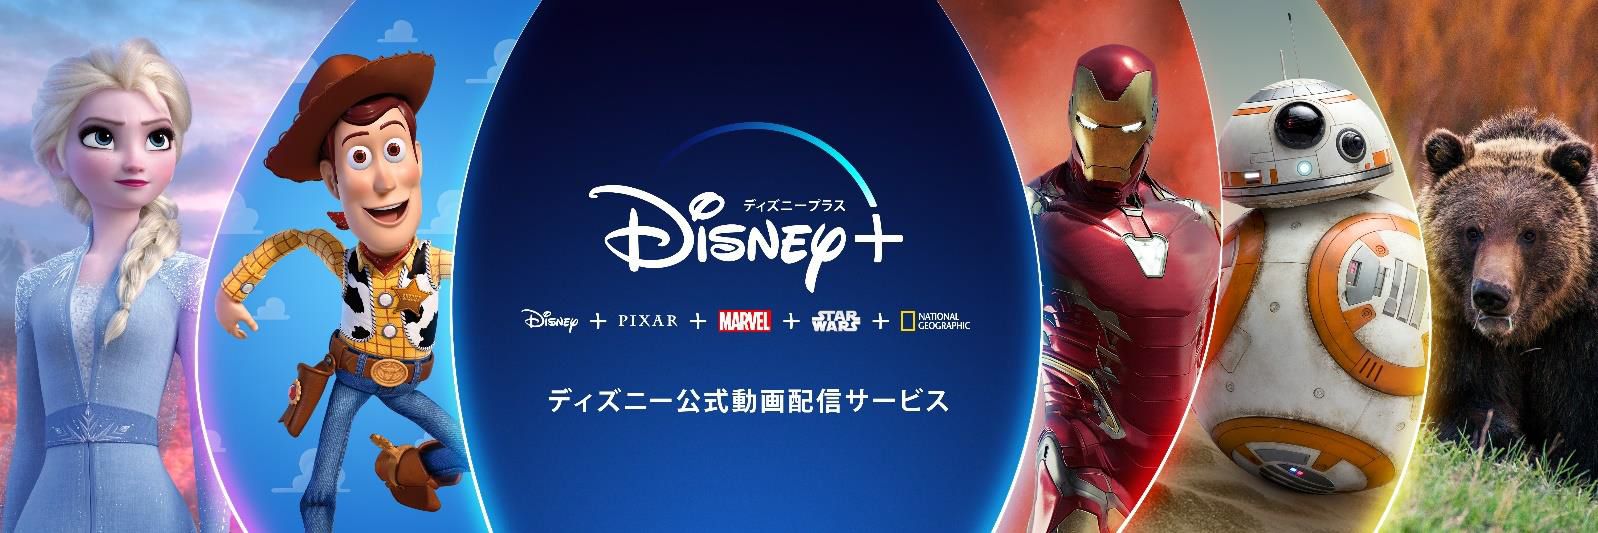 Disney 12月の配信ラインナップ ディズニー ピクサー ソウルフル ワールド が配信 Anime Recorder